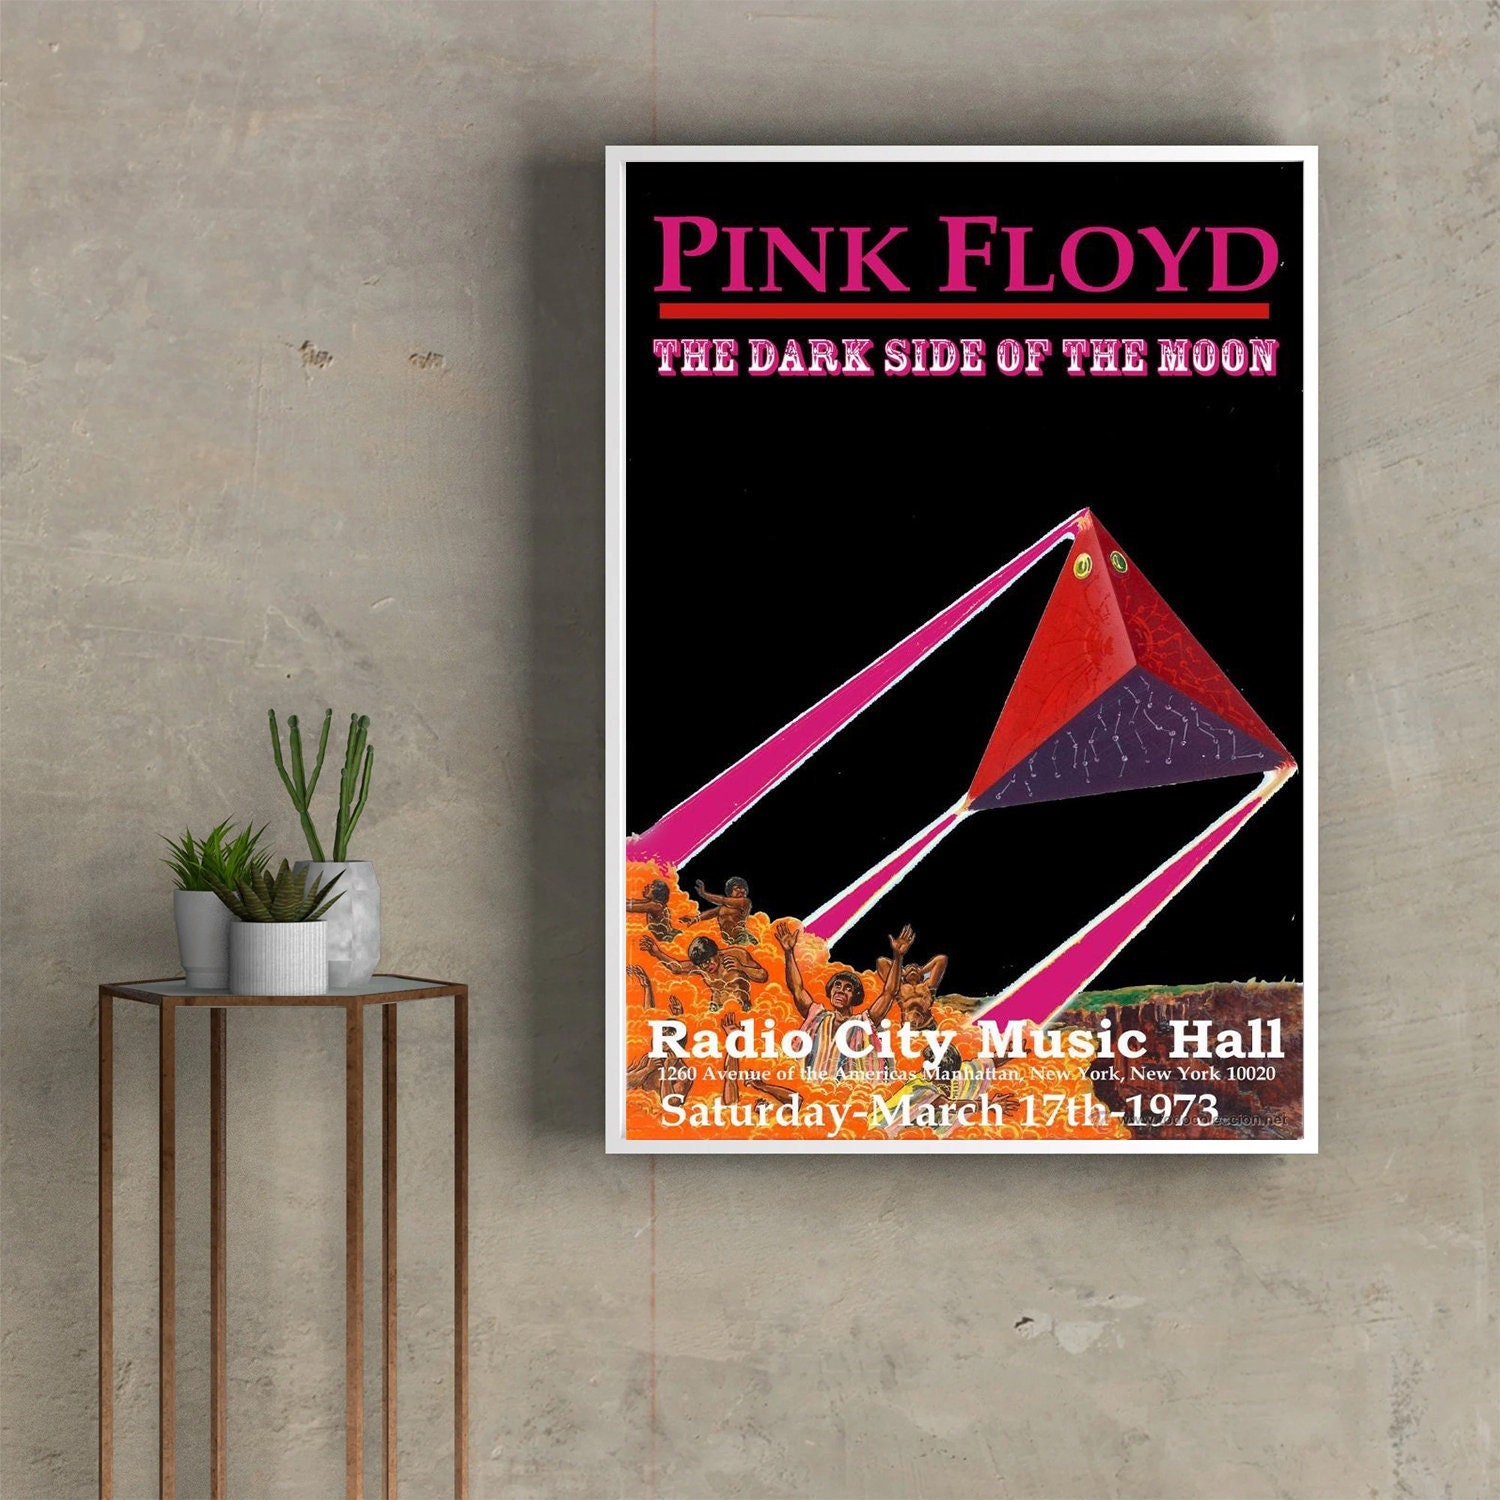 Pink Floyd At Radio City Music Hall Concert Poster